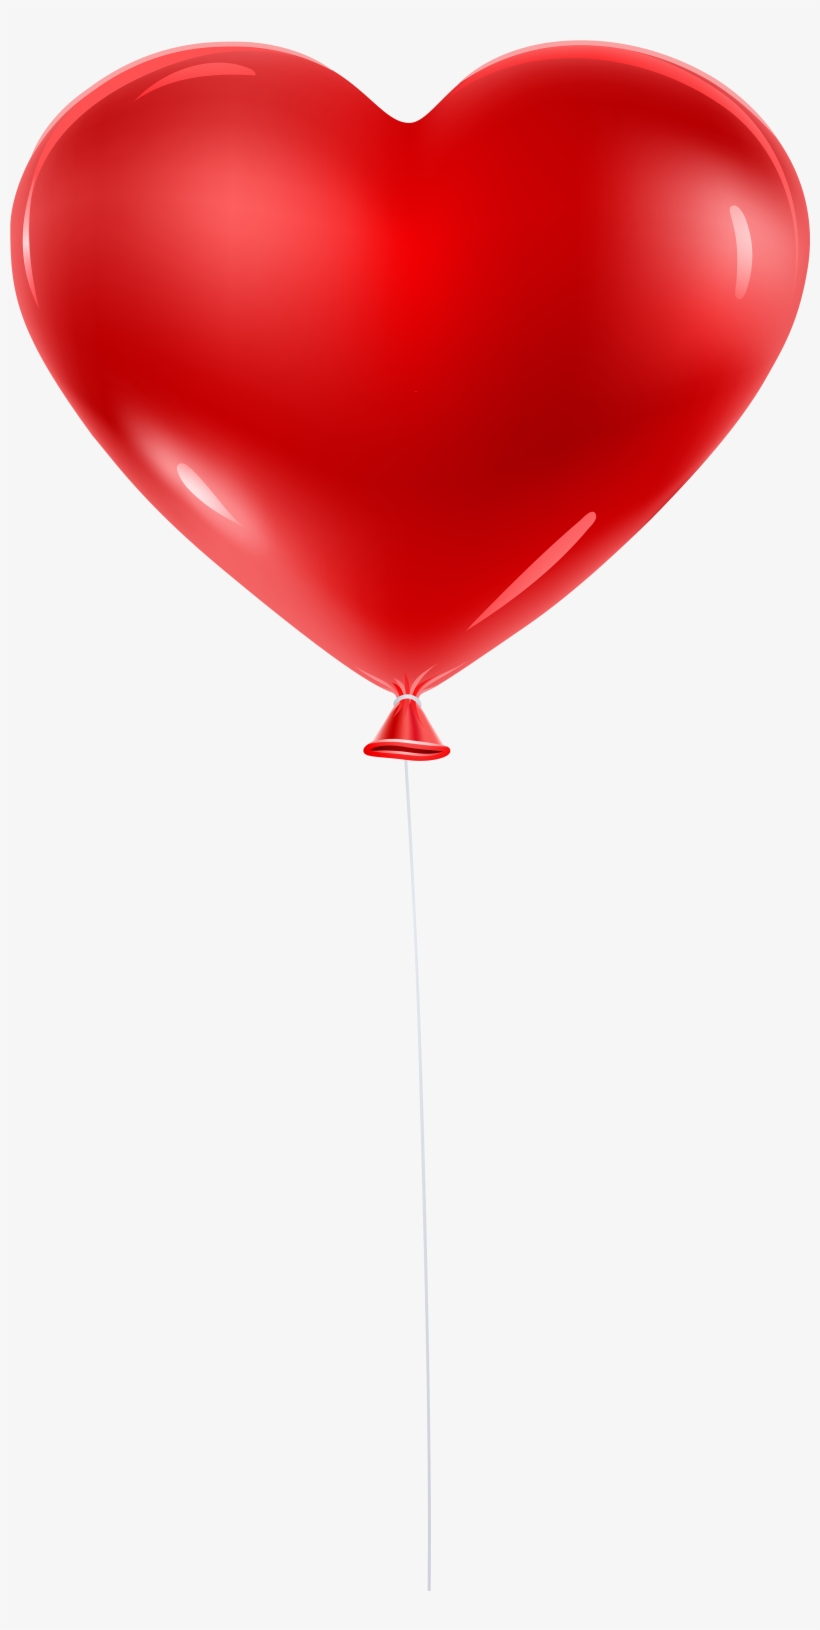 Red Balloon Heart Transparent Clip Artu200b Gallery - Balloon Birthday, transparent png #642348